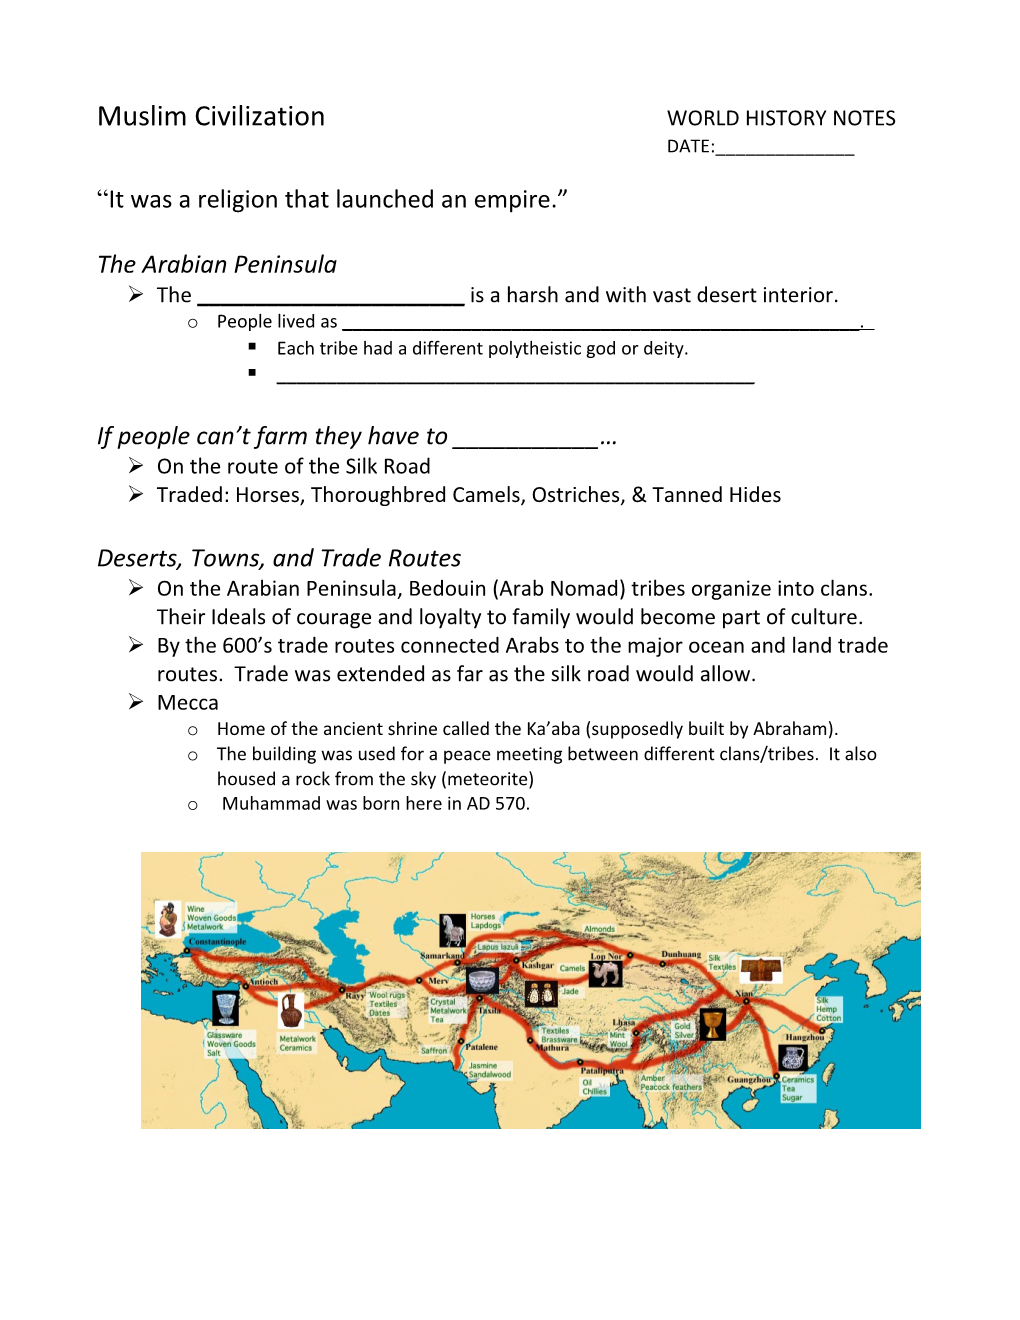 Muslim Civilization WORLD HISTORY NOTES DATE:______